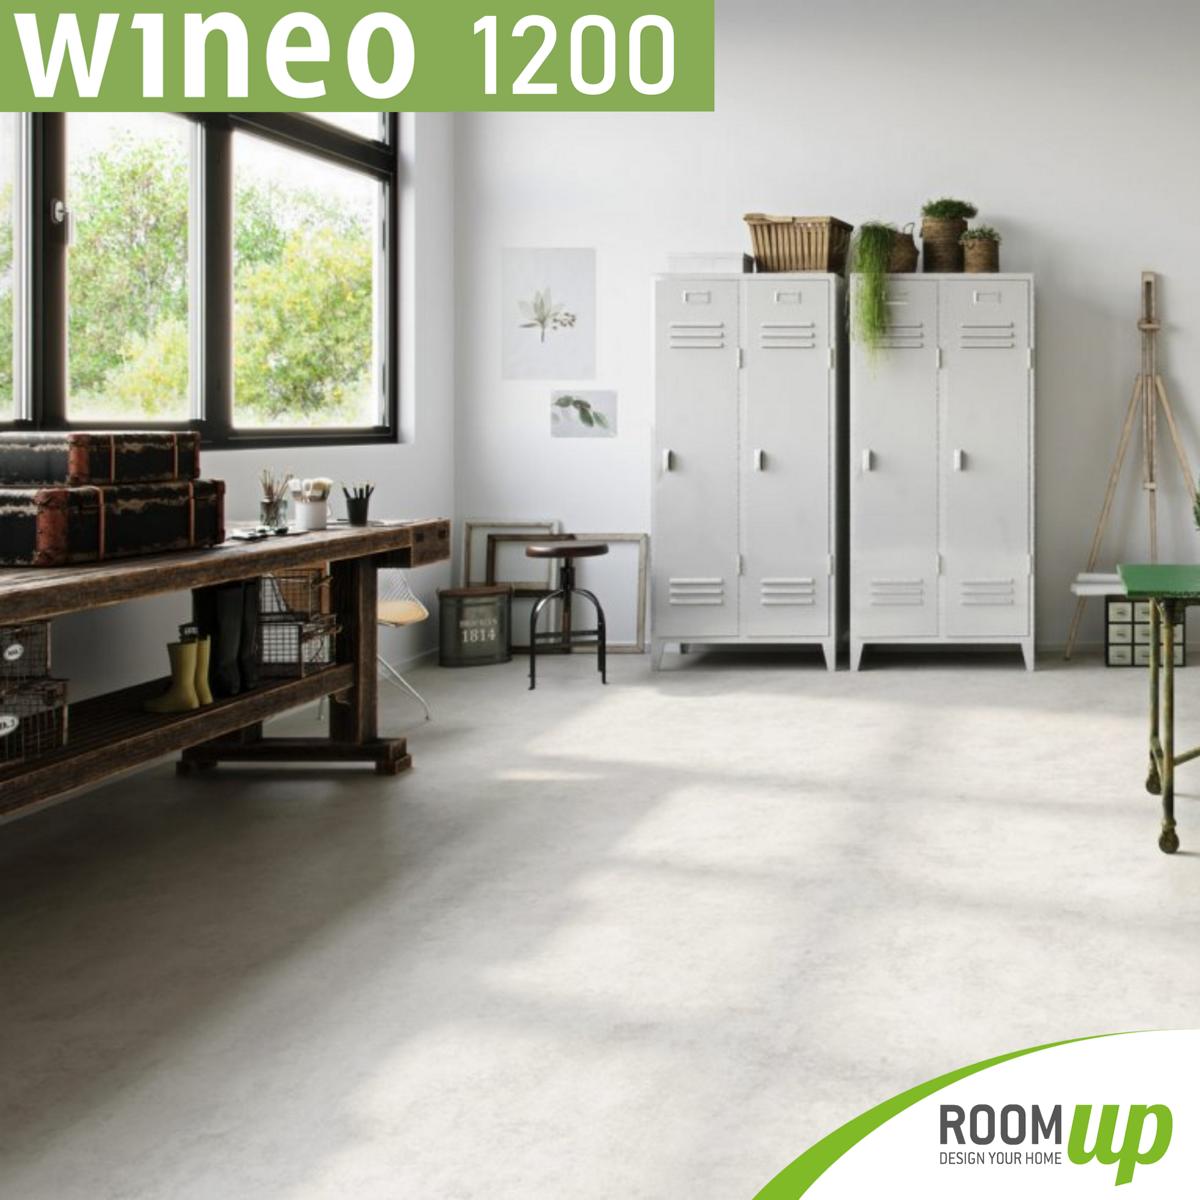 Wineo 1200 Stone XL - Introducing Otto